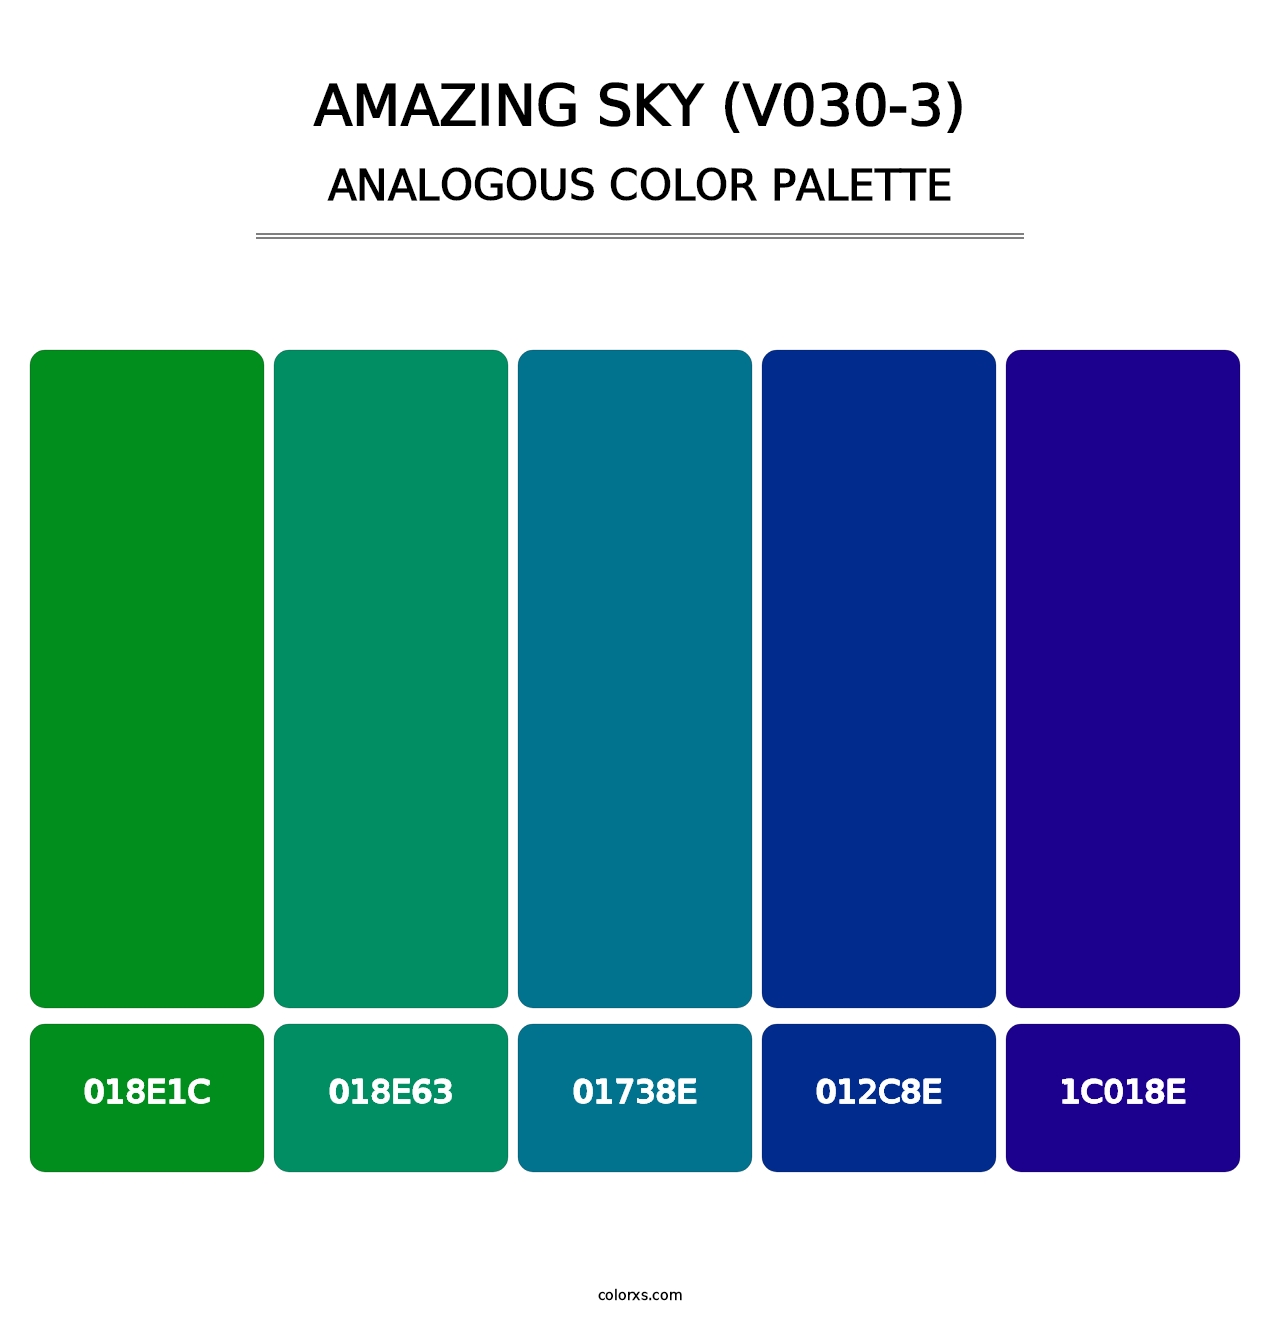 Amazing Sky (V030-3) - Analogous Color Palette